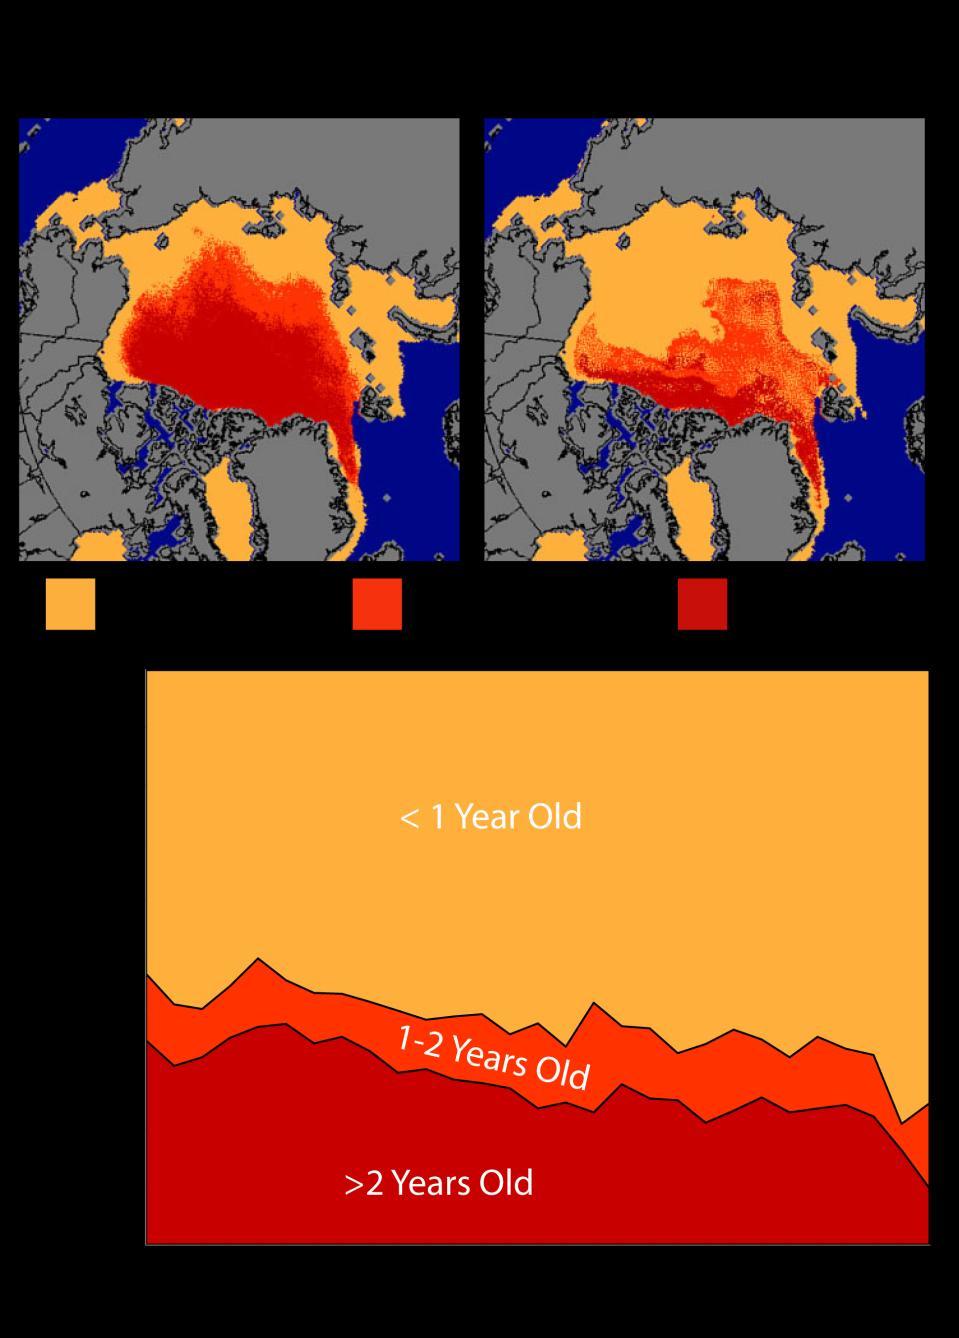 Latest information on Arctic sea ice